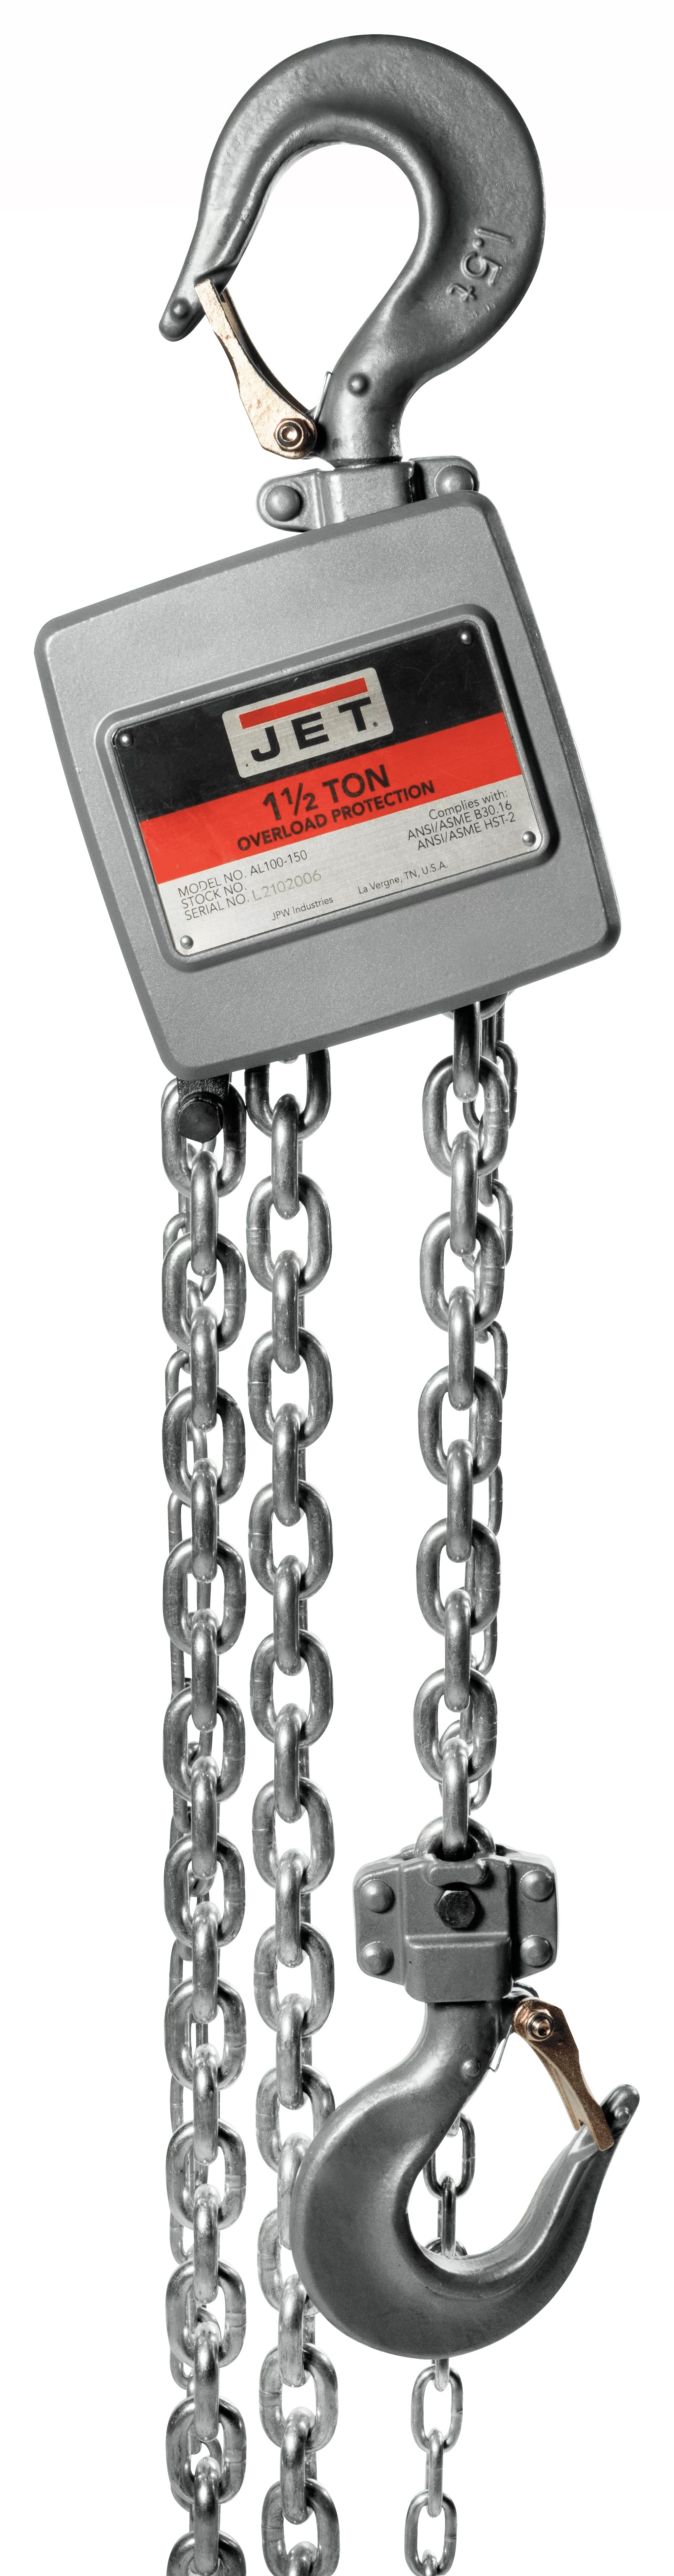 AL100-150-30 1-1/2 Ton Aluminum Hand Chain Hoist with 30ft of Lift